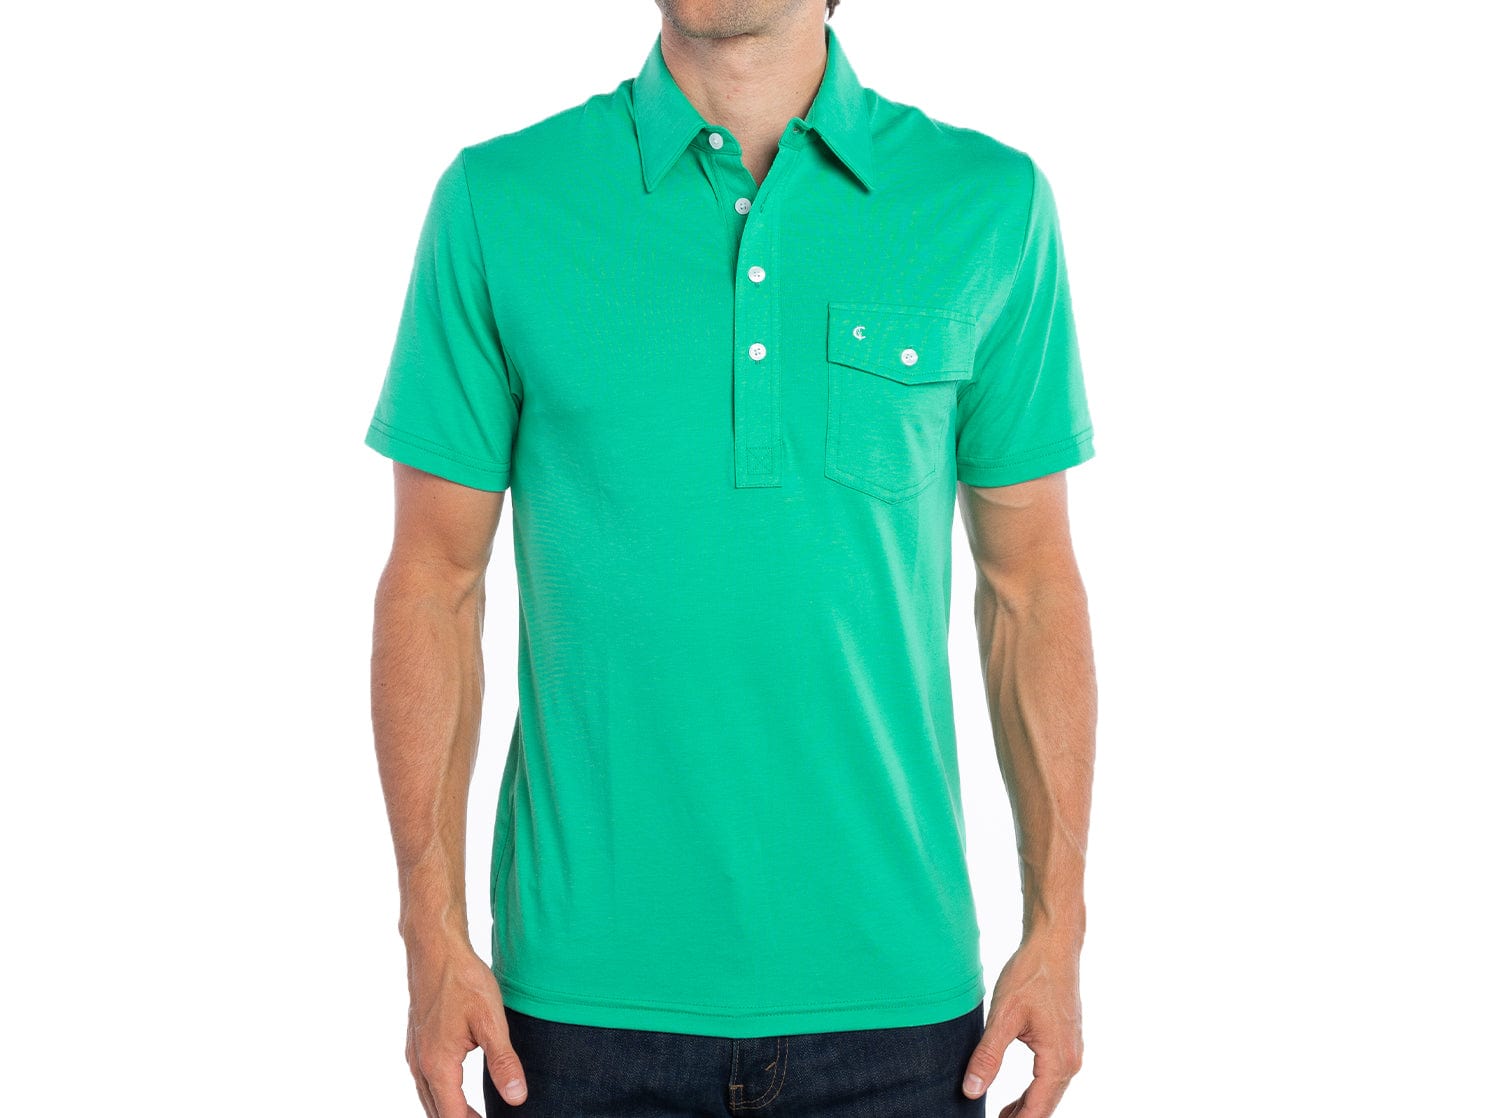 Performance Players Shirt - Golf Green - Secondary